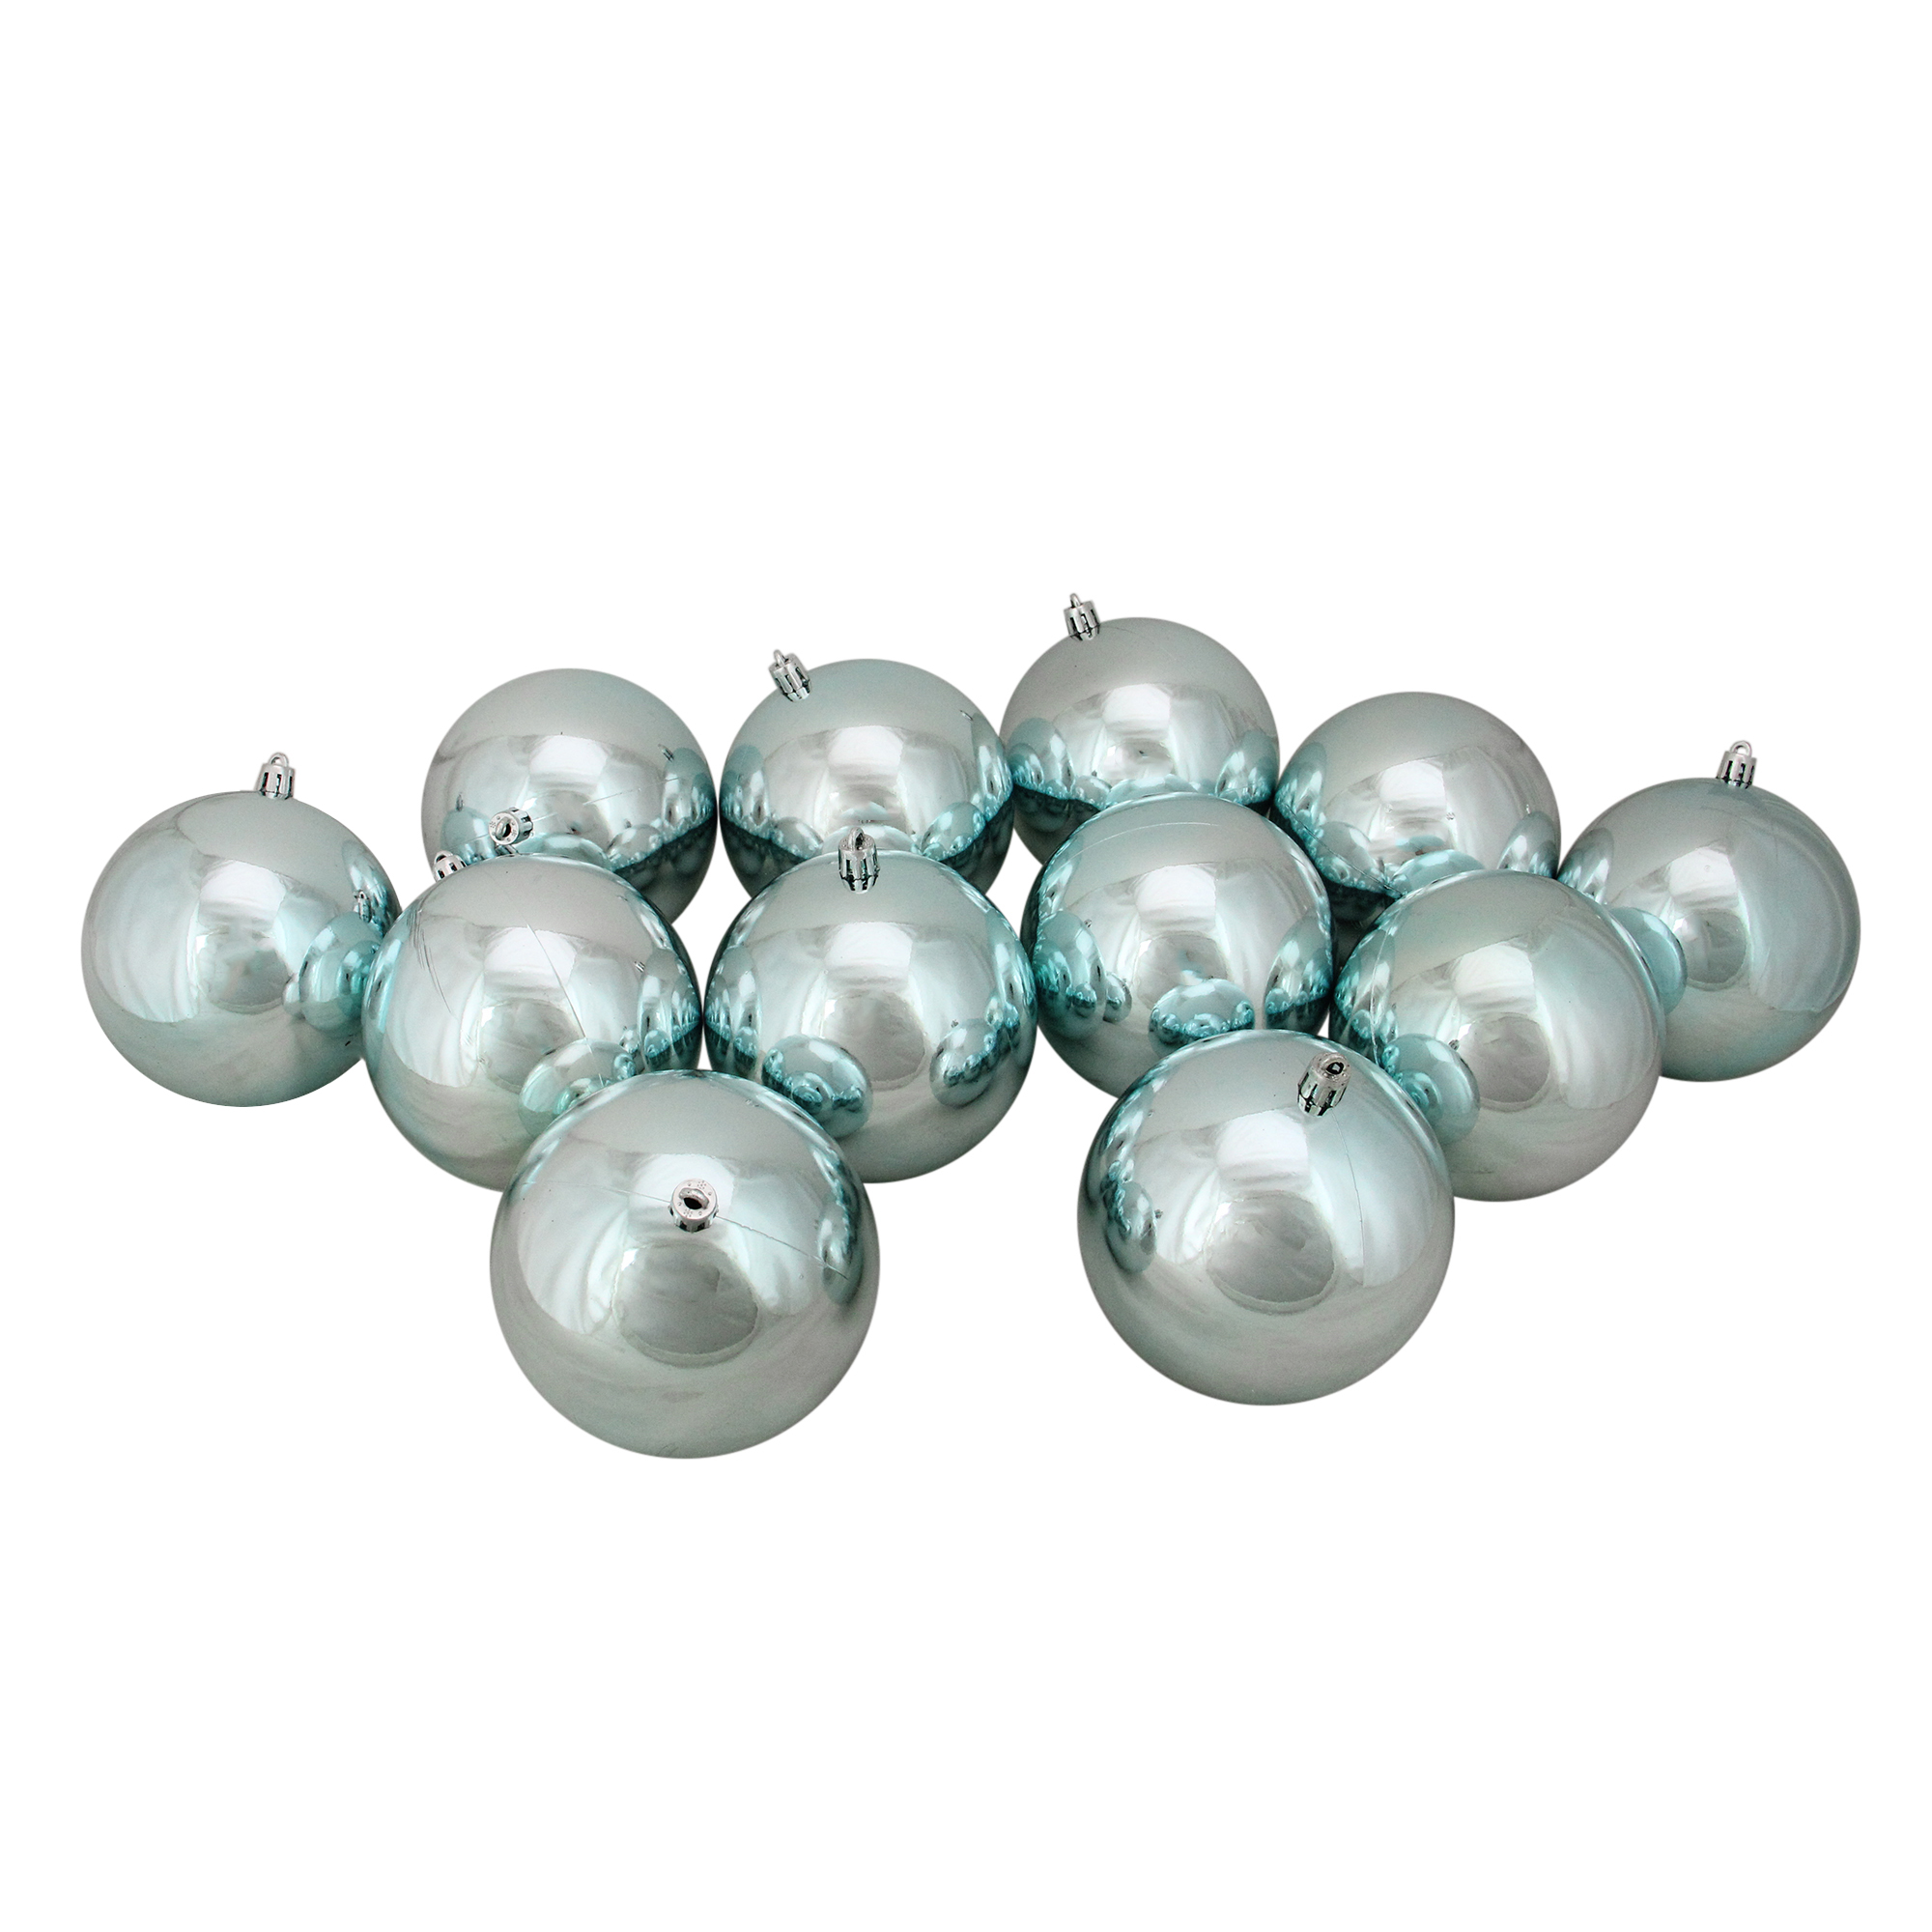 Northlight 12ct Mermaid Blue Shatterproof Shiny Christmas Ball Ornaments 4" (100mm)